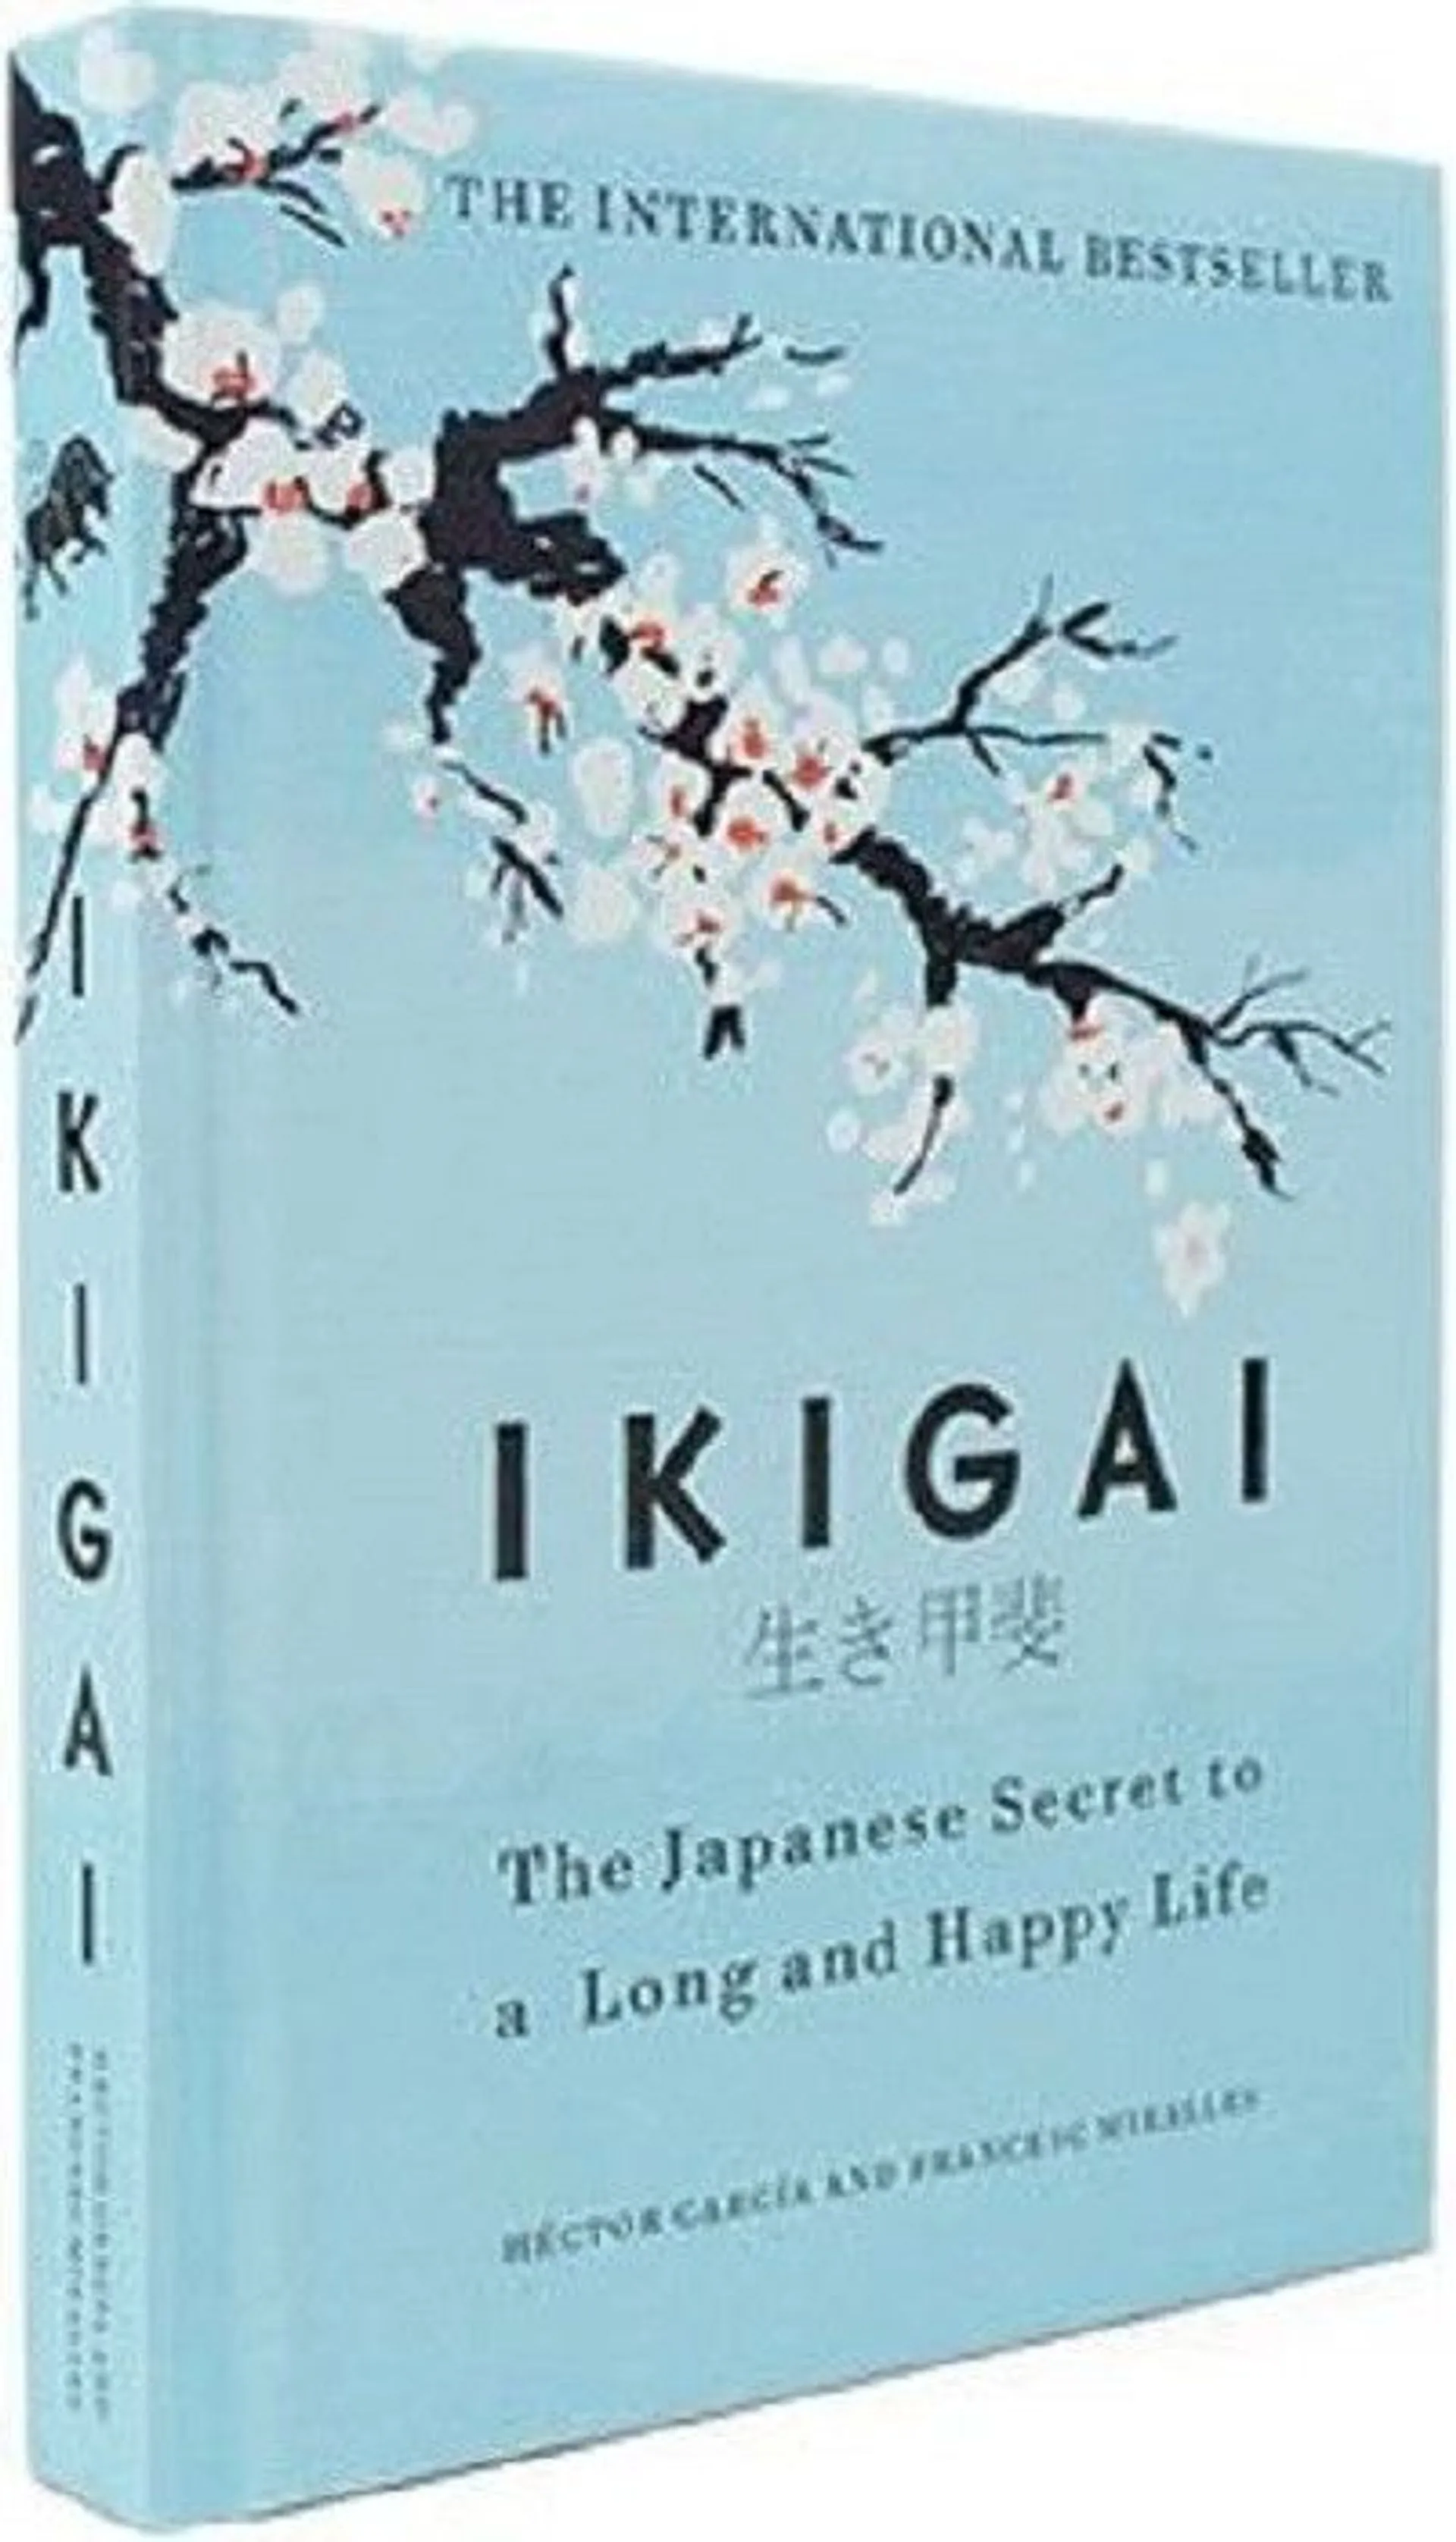 Ikigai: Japanese Secret to a Long and Happy Life